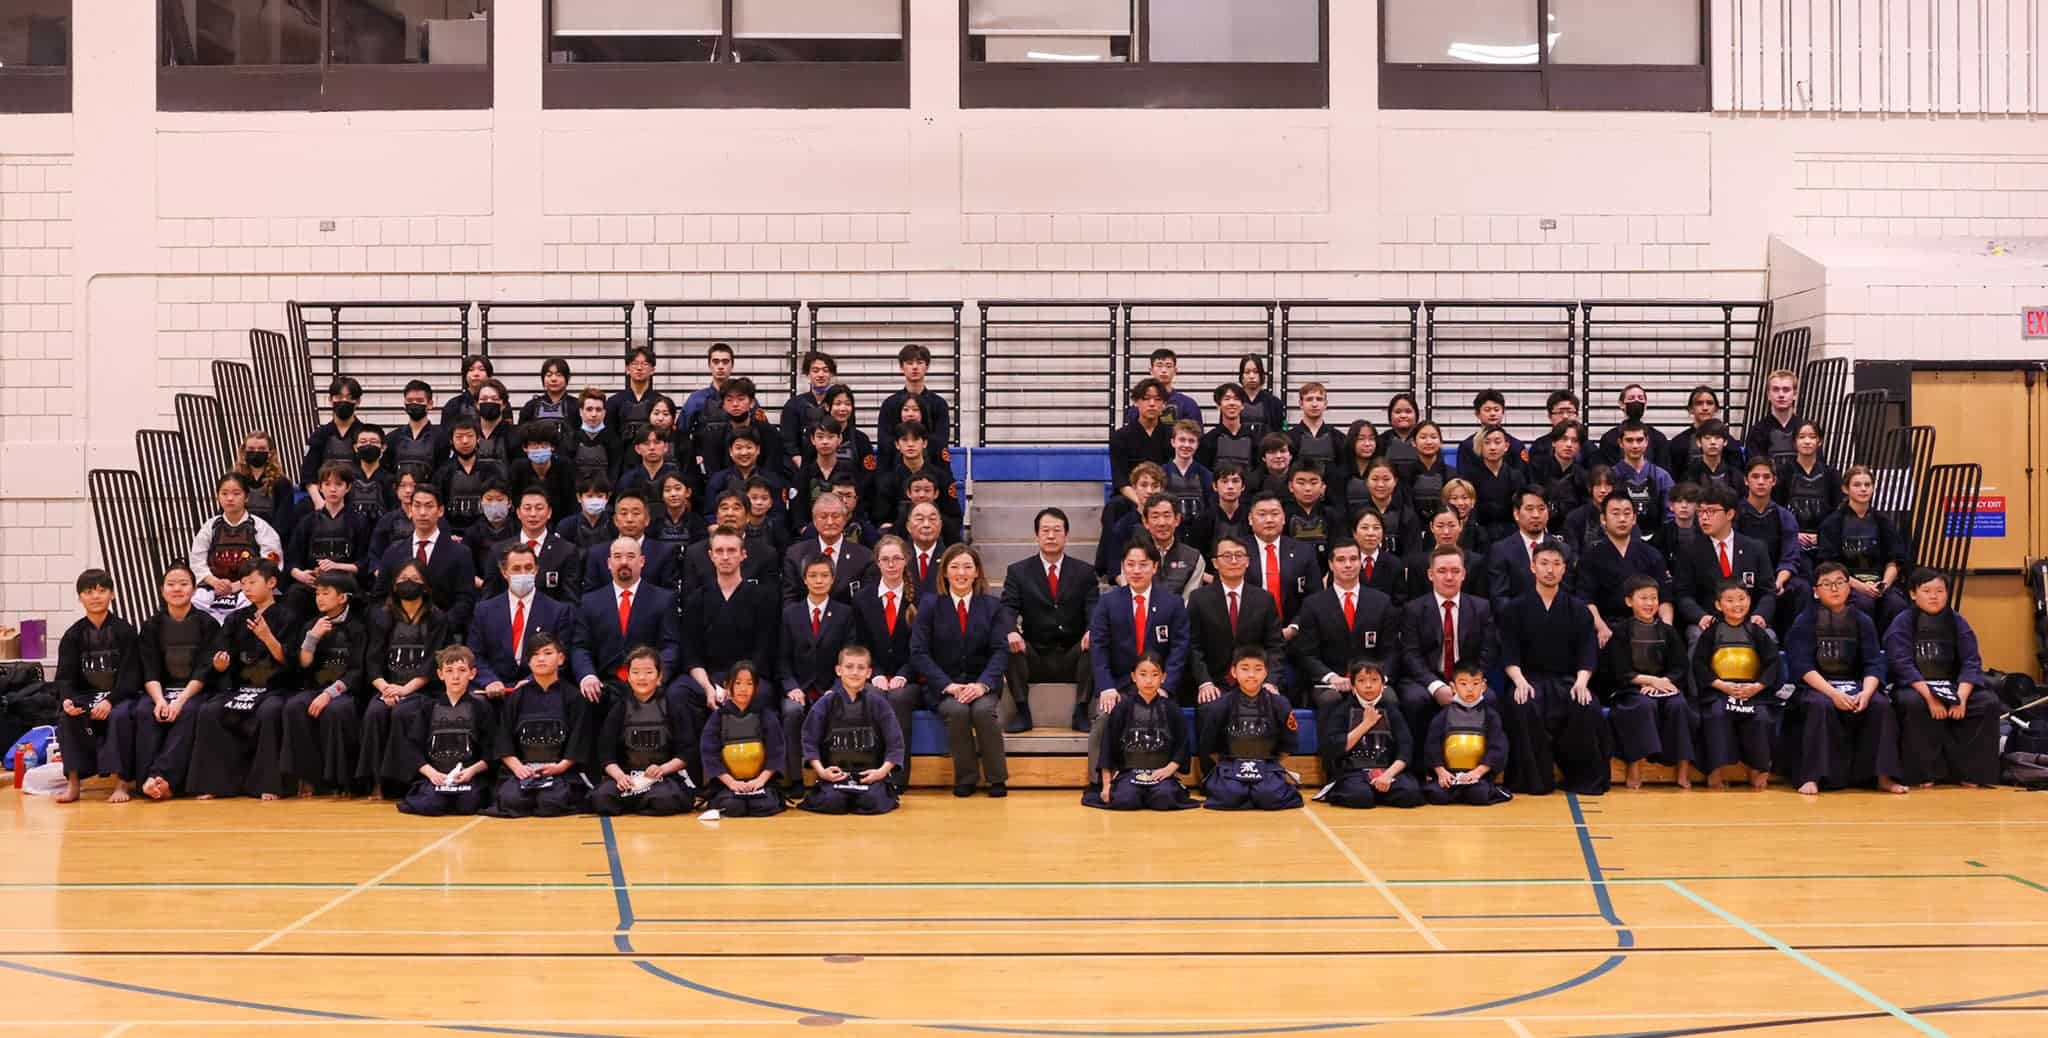 Junior Nationals delegation - players and referees. At Mount Royal University in Calgary, Alberta. May 28, 2022